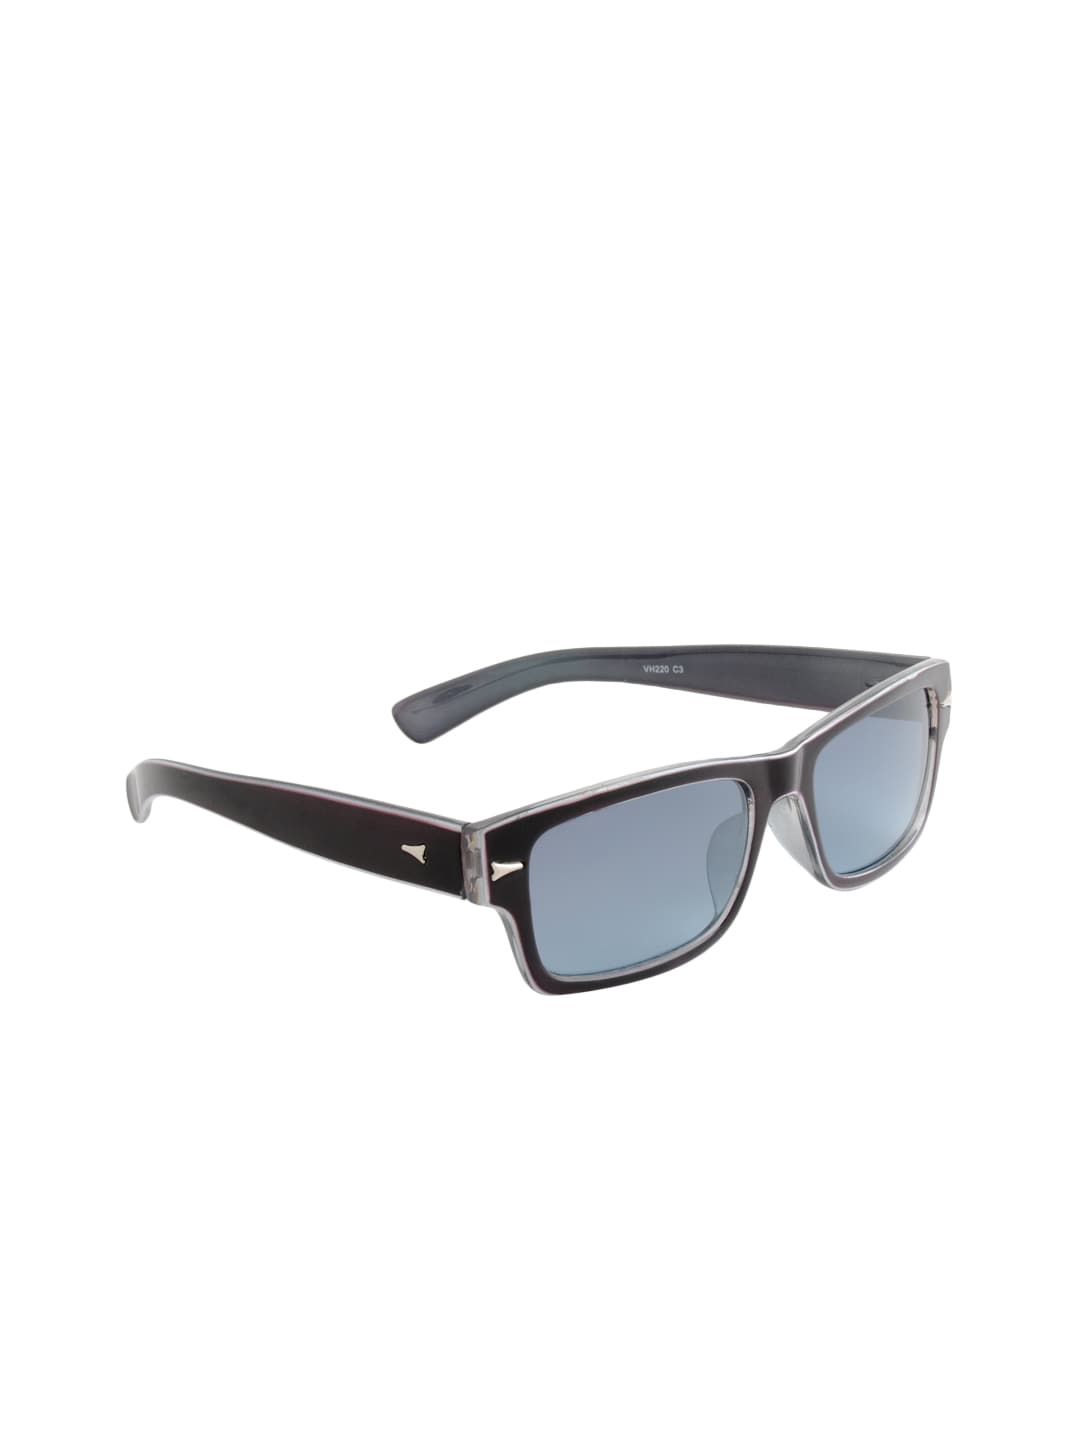 Van Heusen Unisex Sunglasses VH220-C3